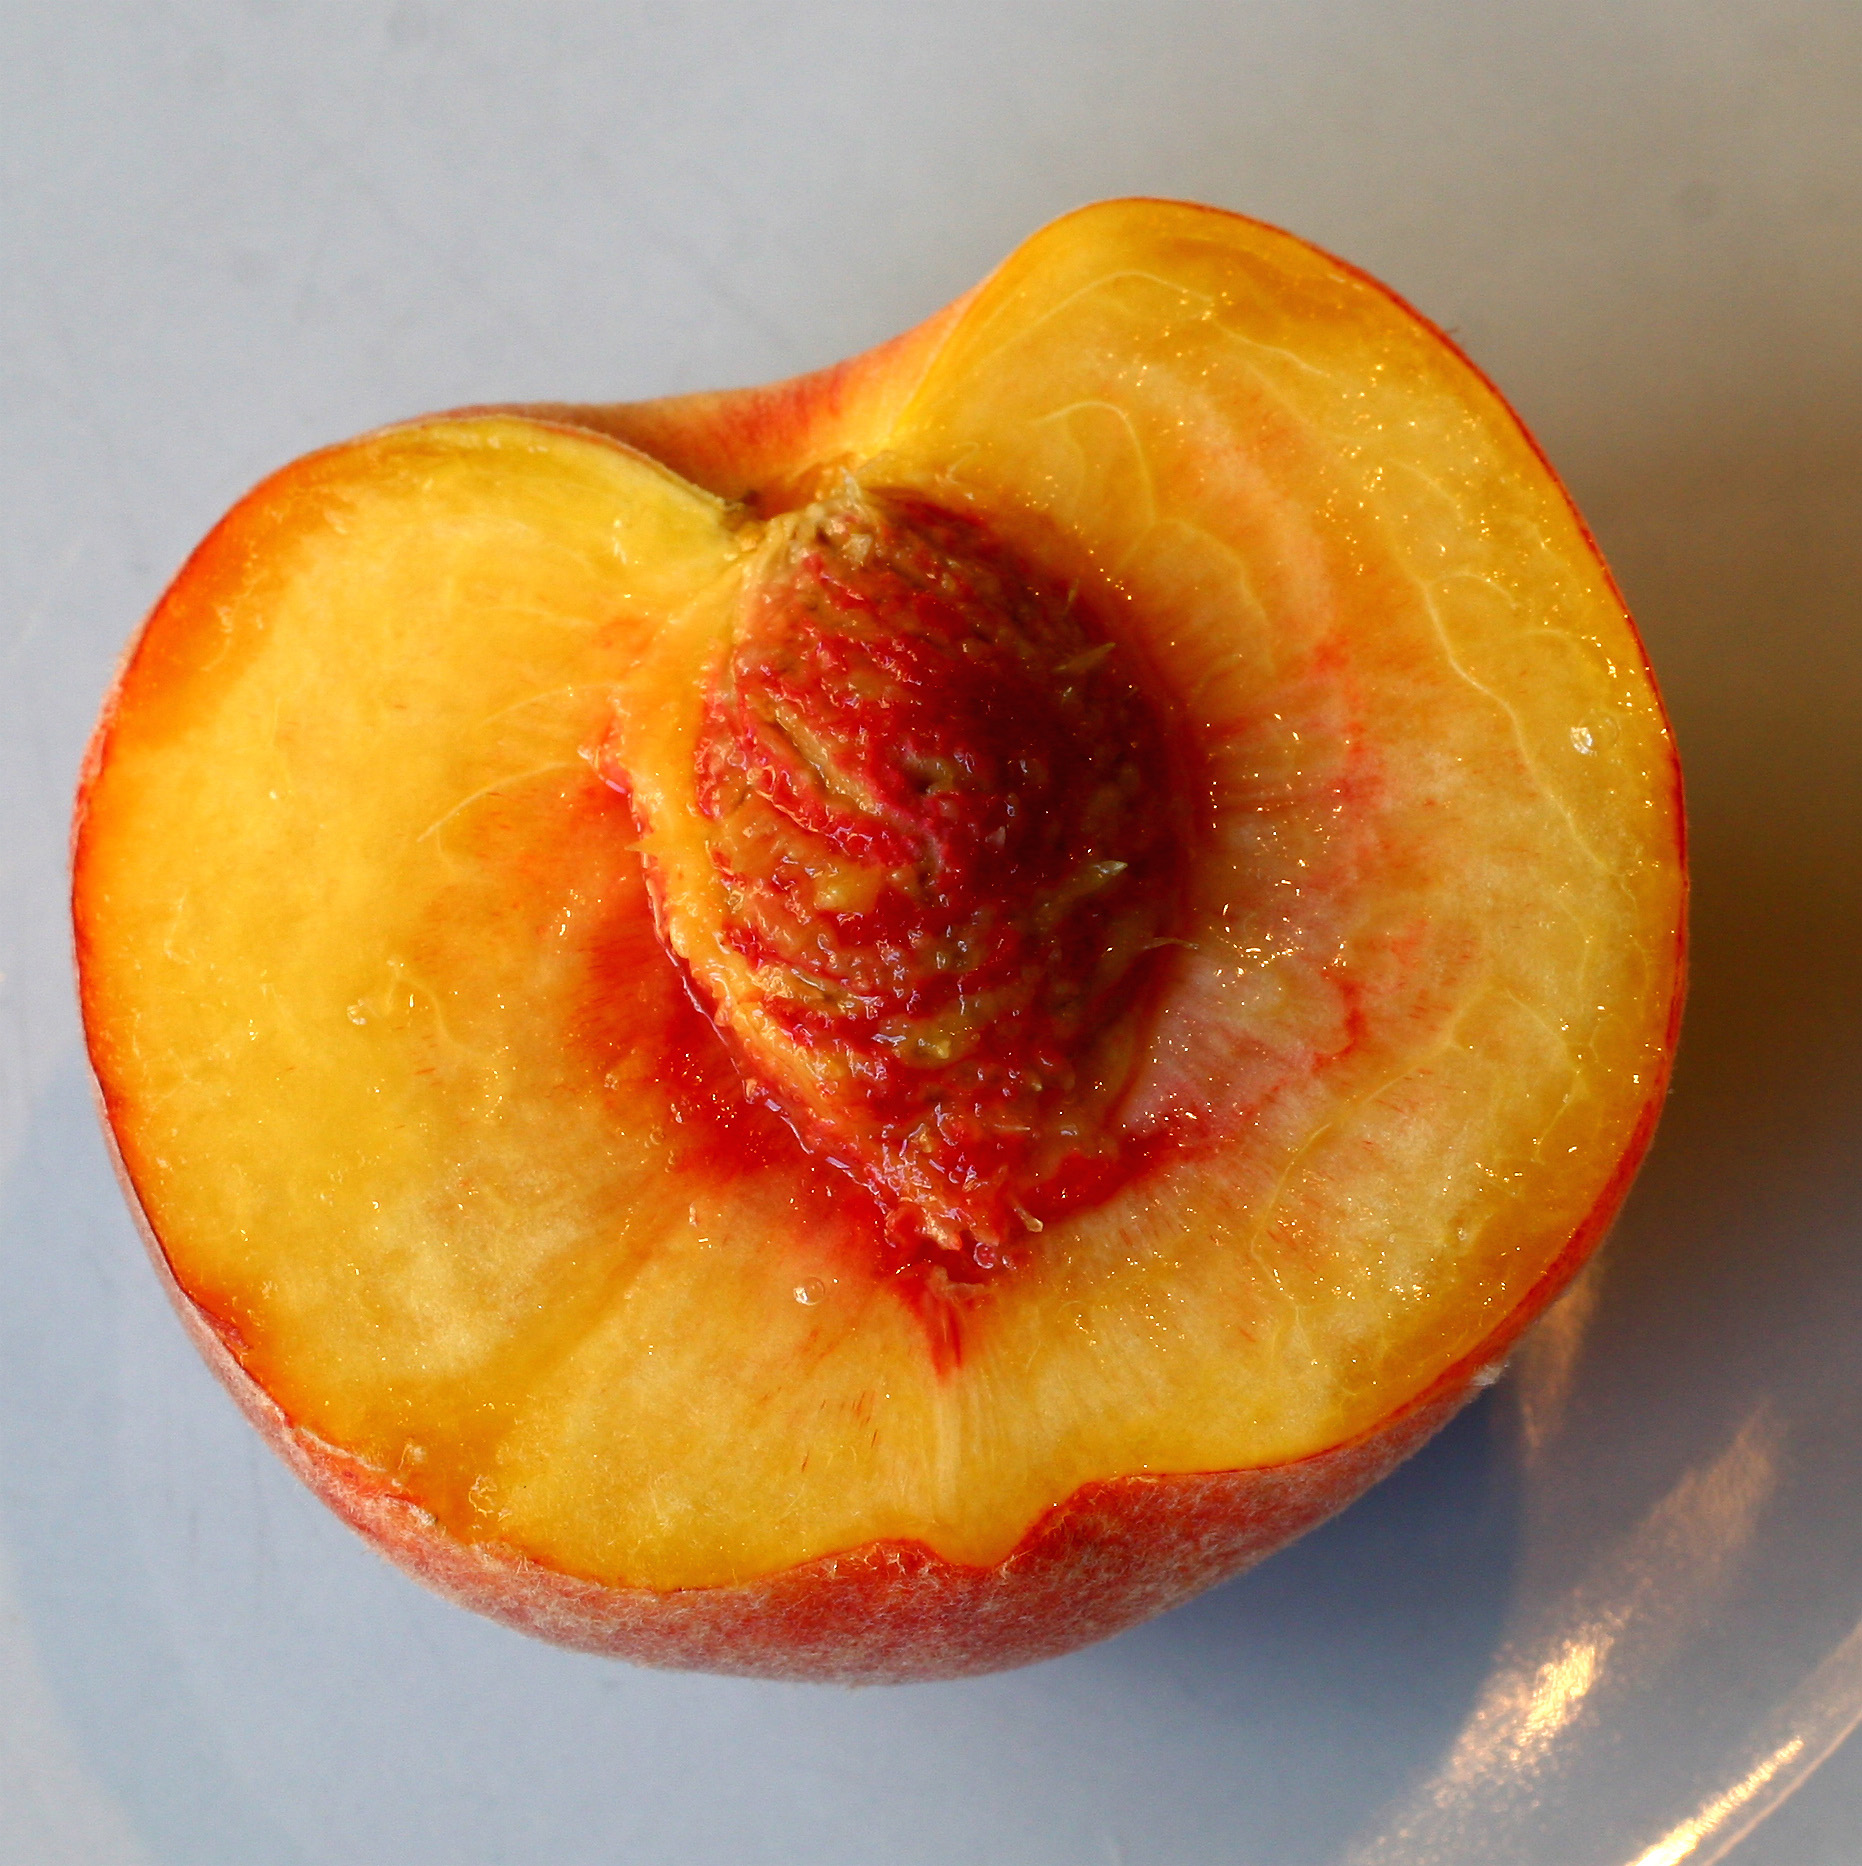 English: juicy peach half